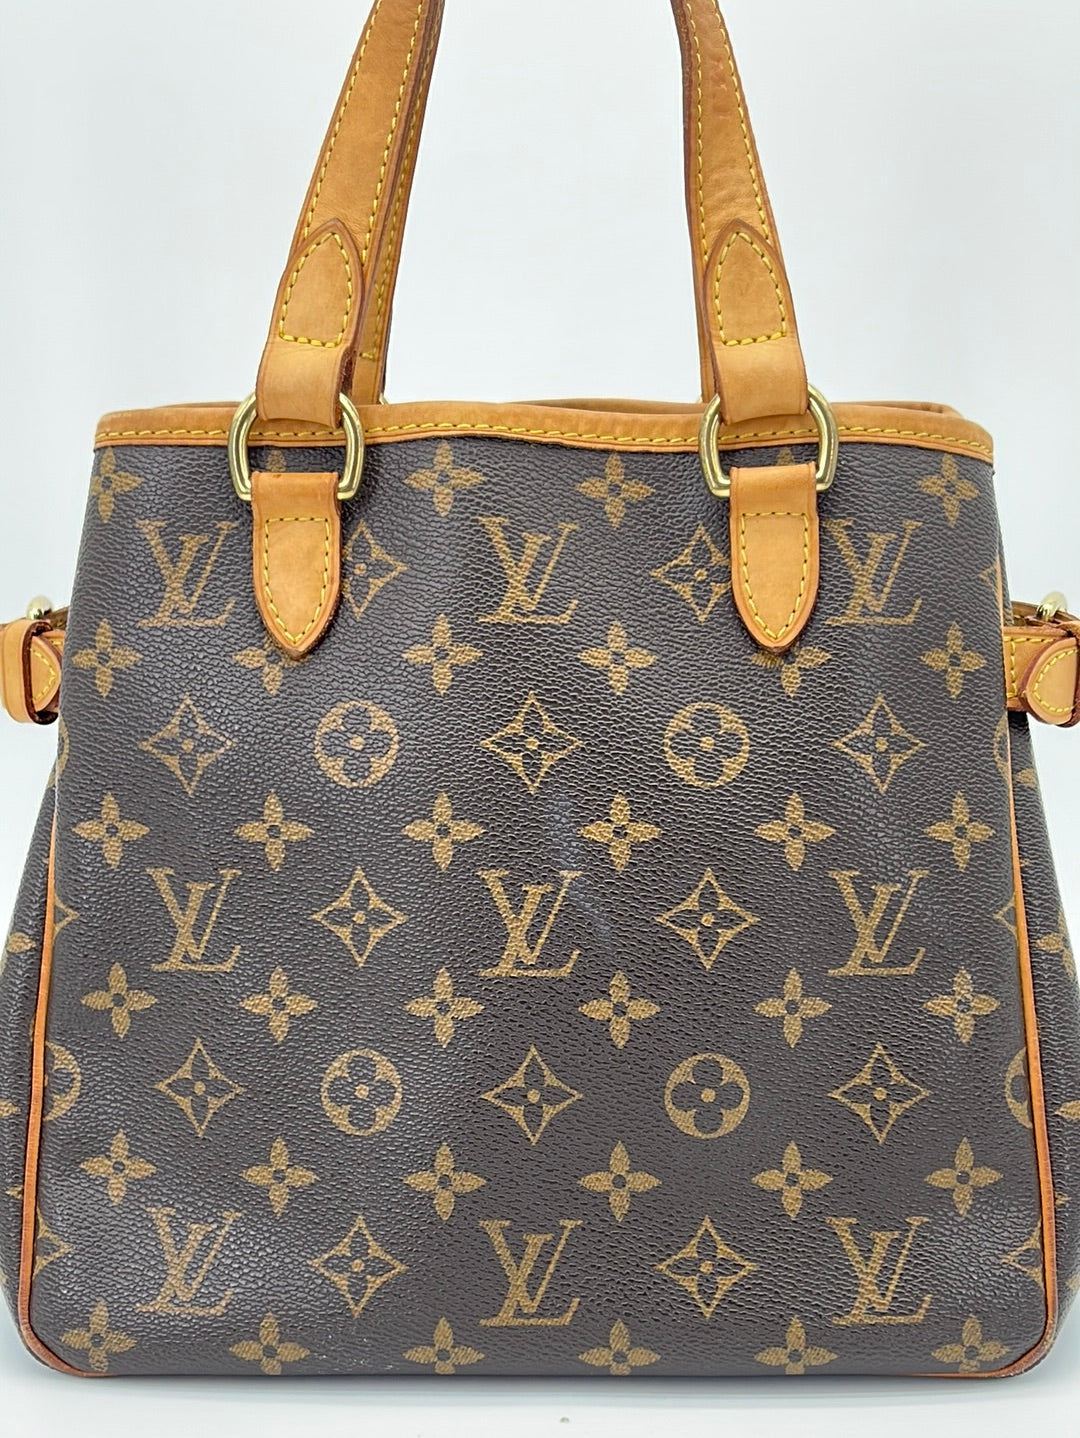 Authentic Louis Vuitton Classic Monogram Batignolles Tote Shoulder